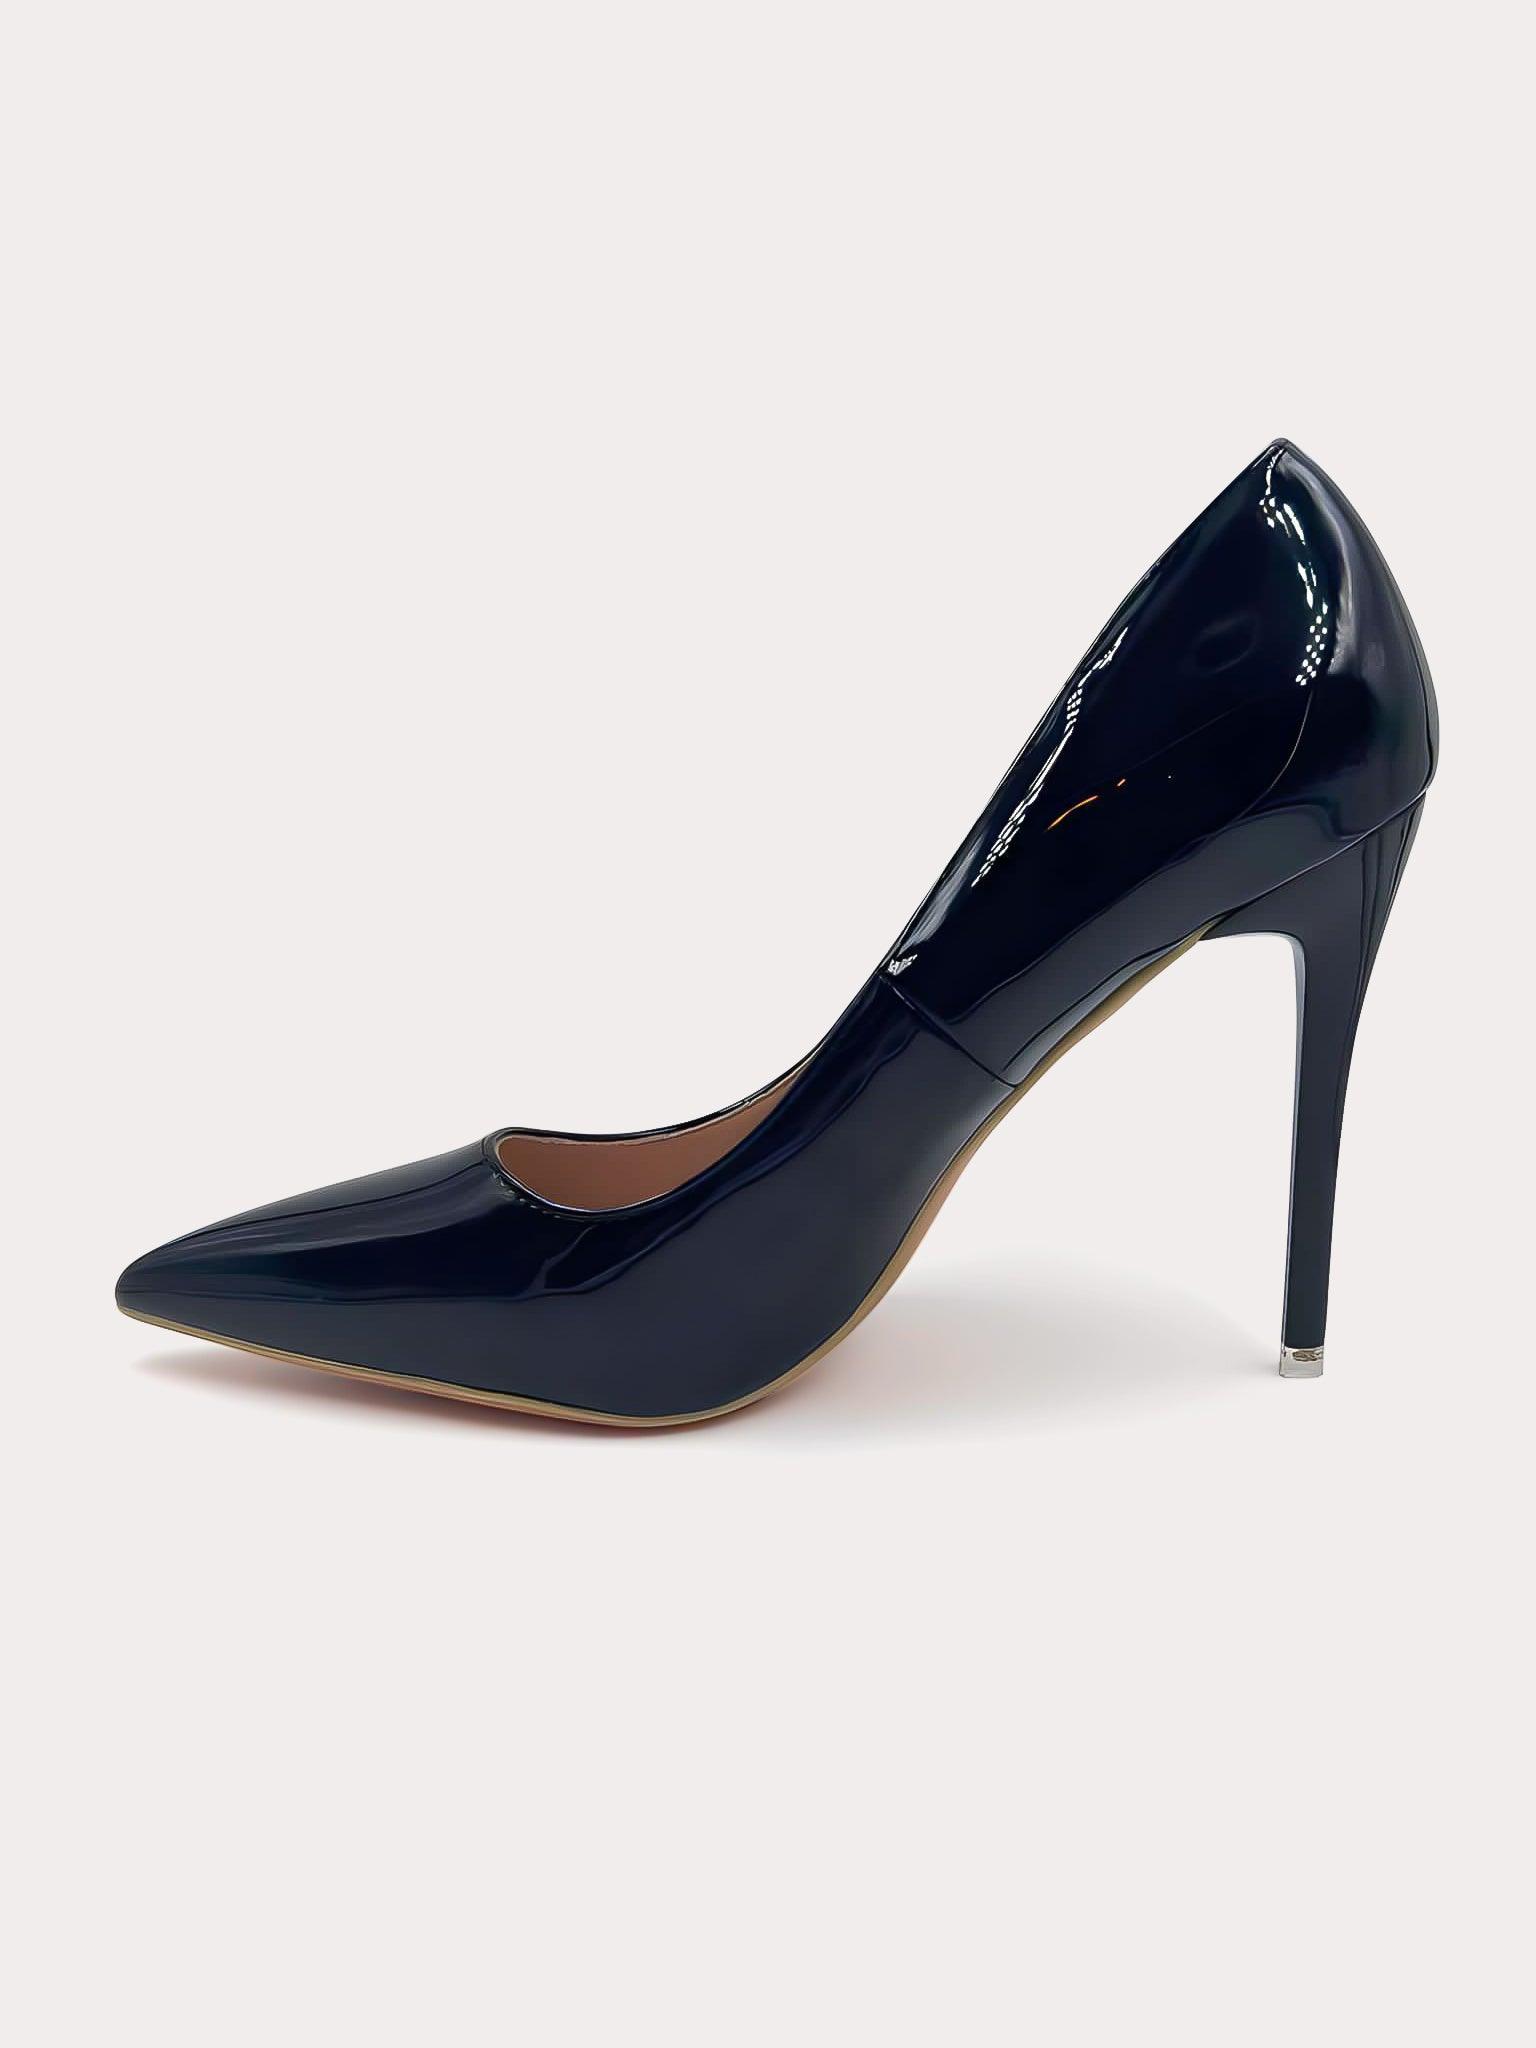 Blair - Black pump with stiletto heel - IQUONIQUE